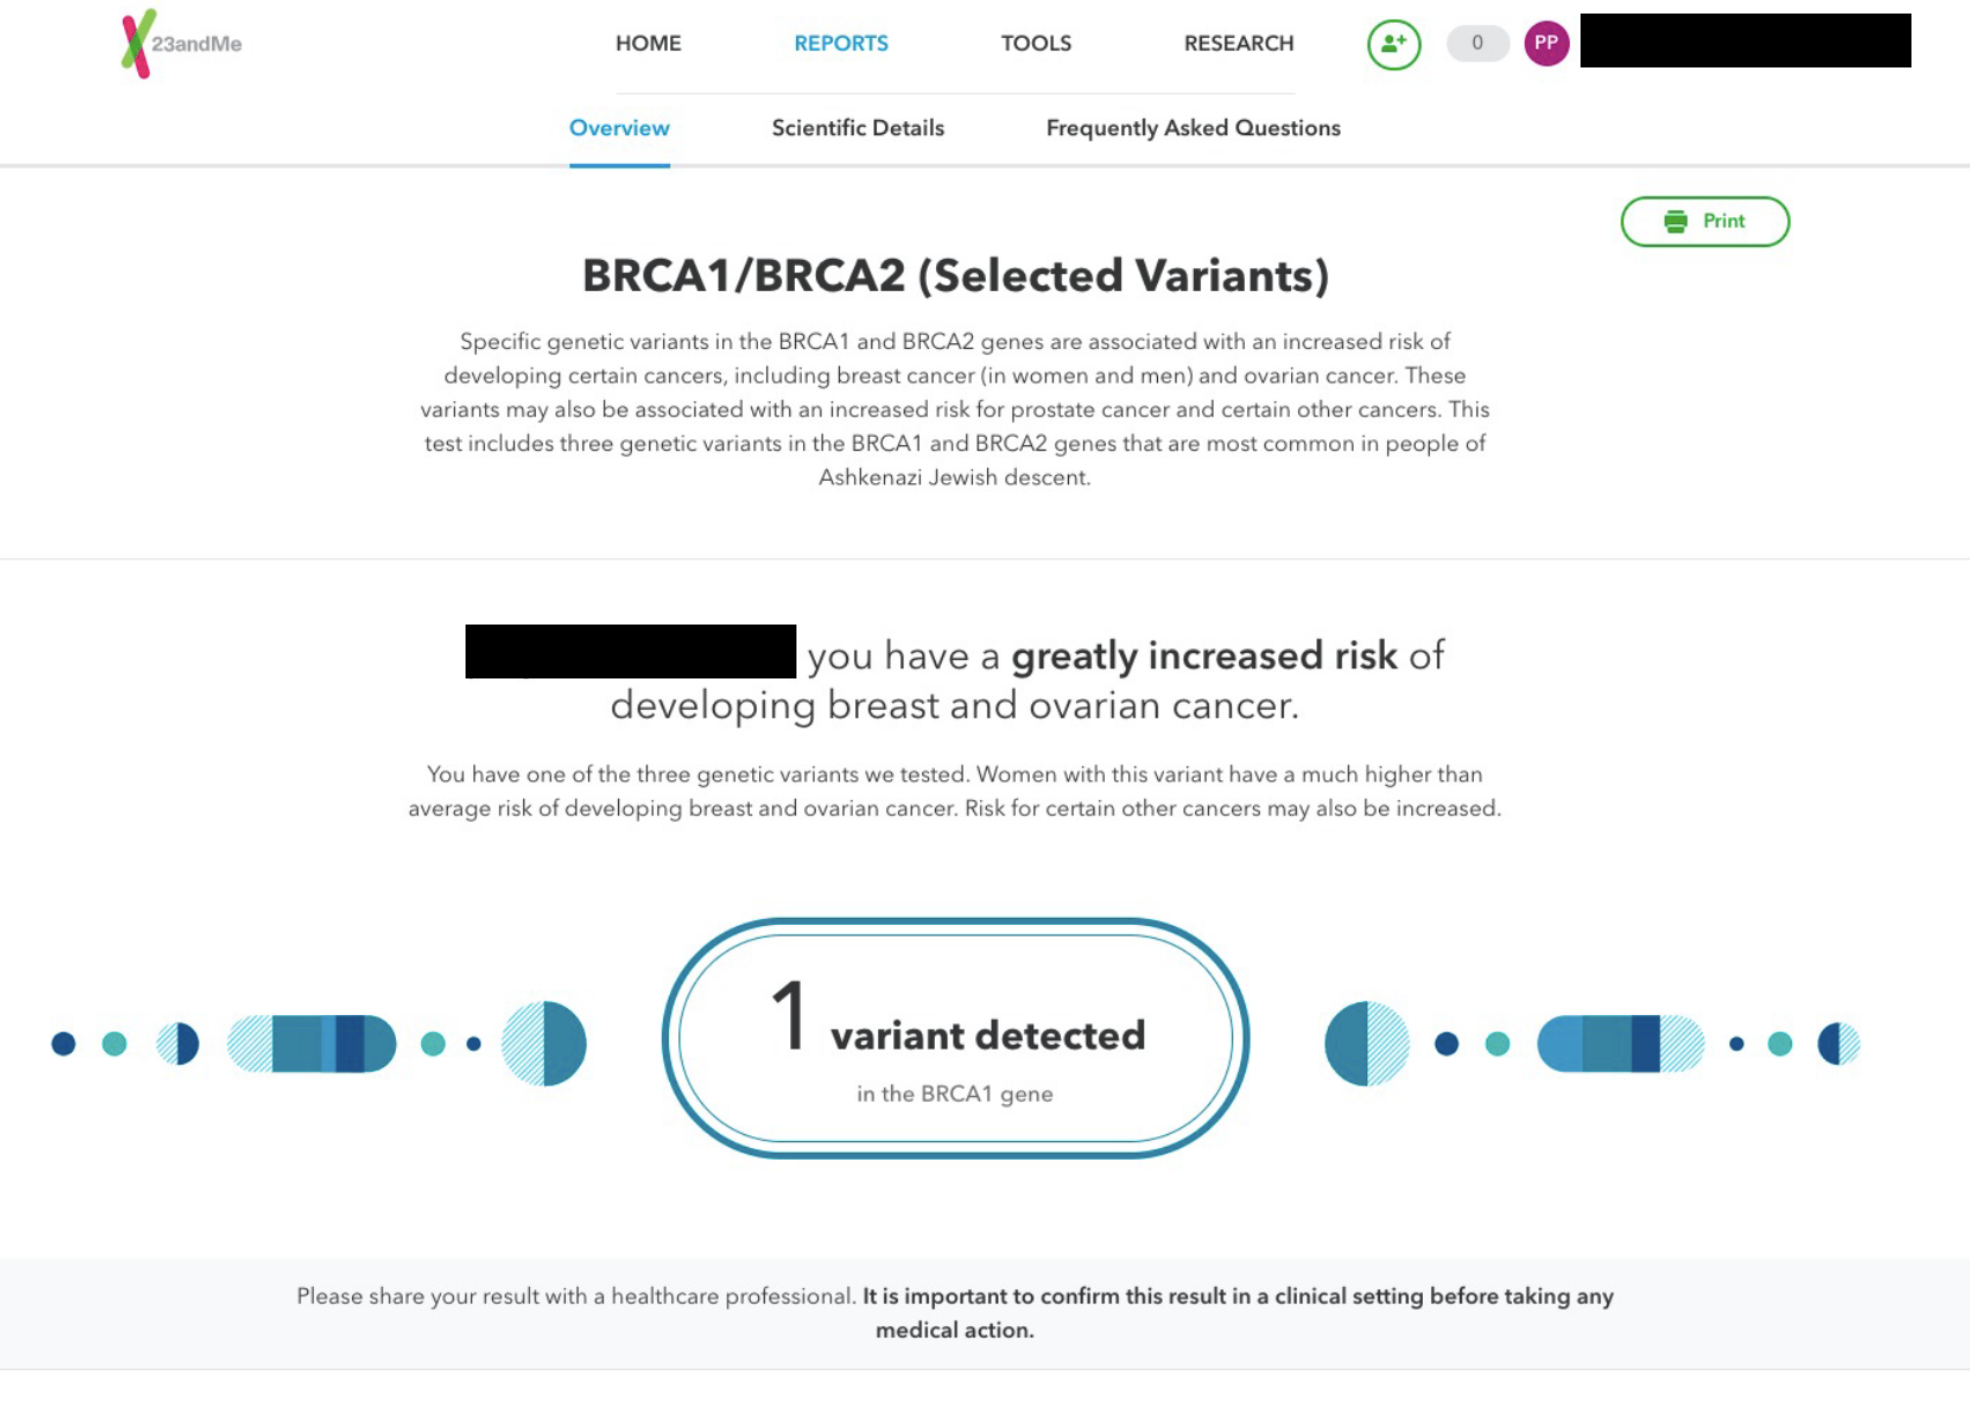 BRCA1/BRCA2 One Variant